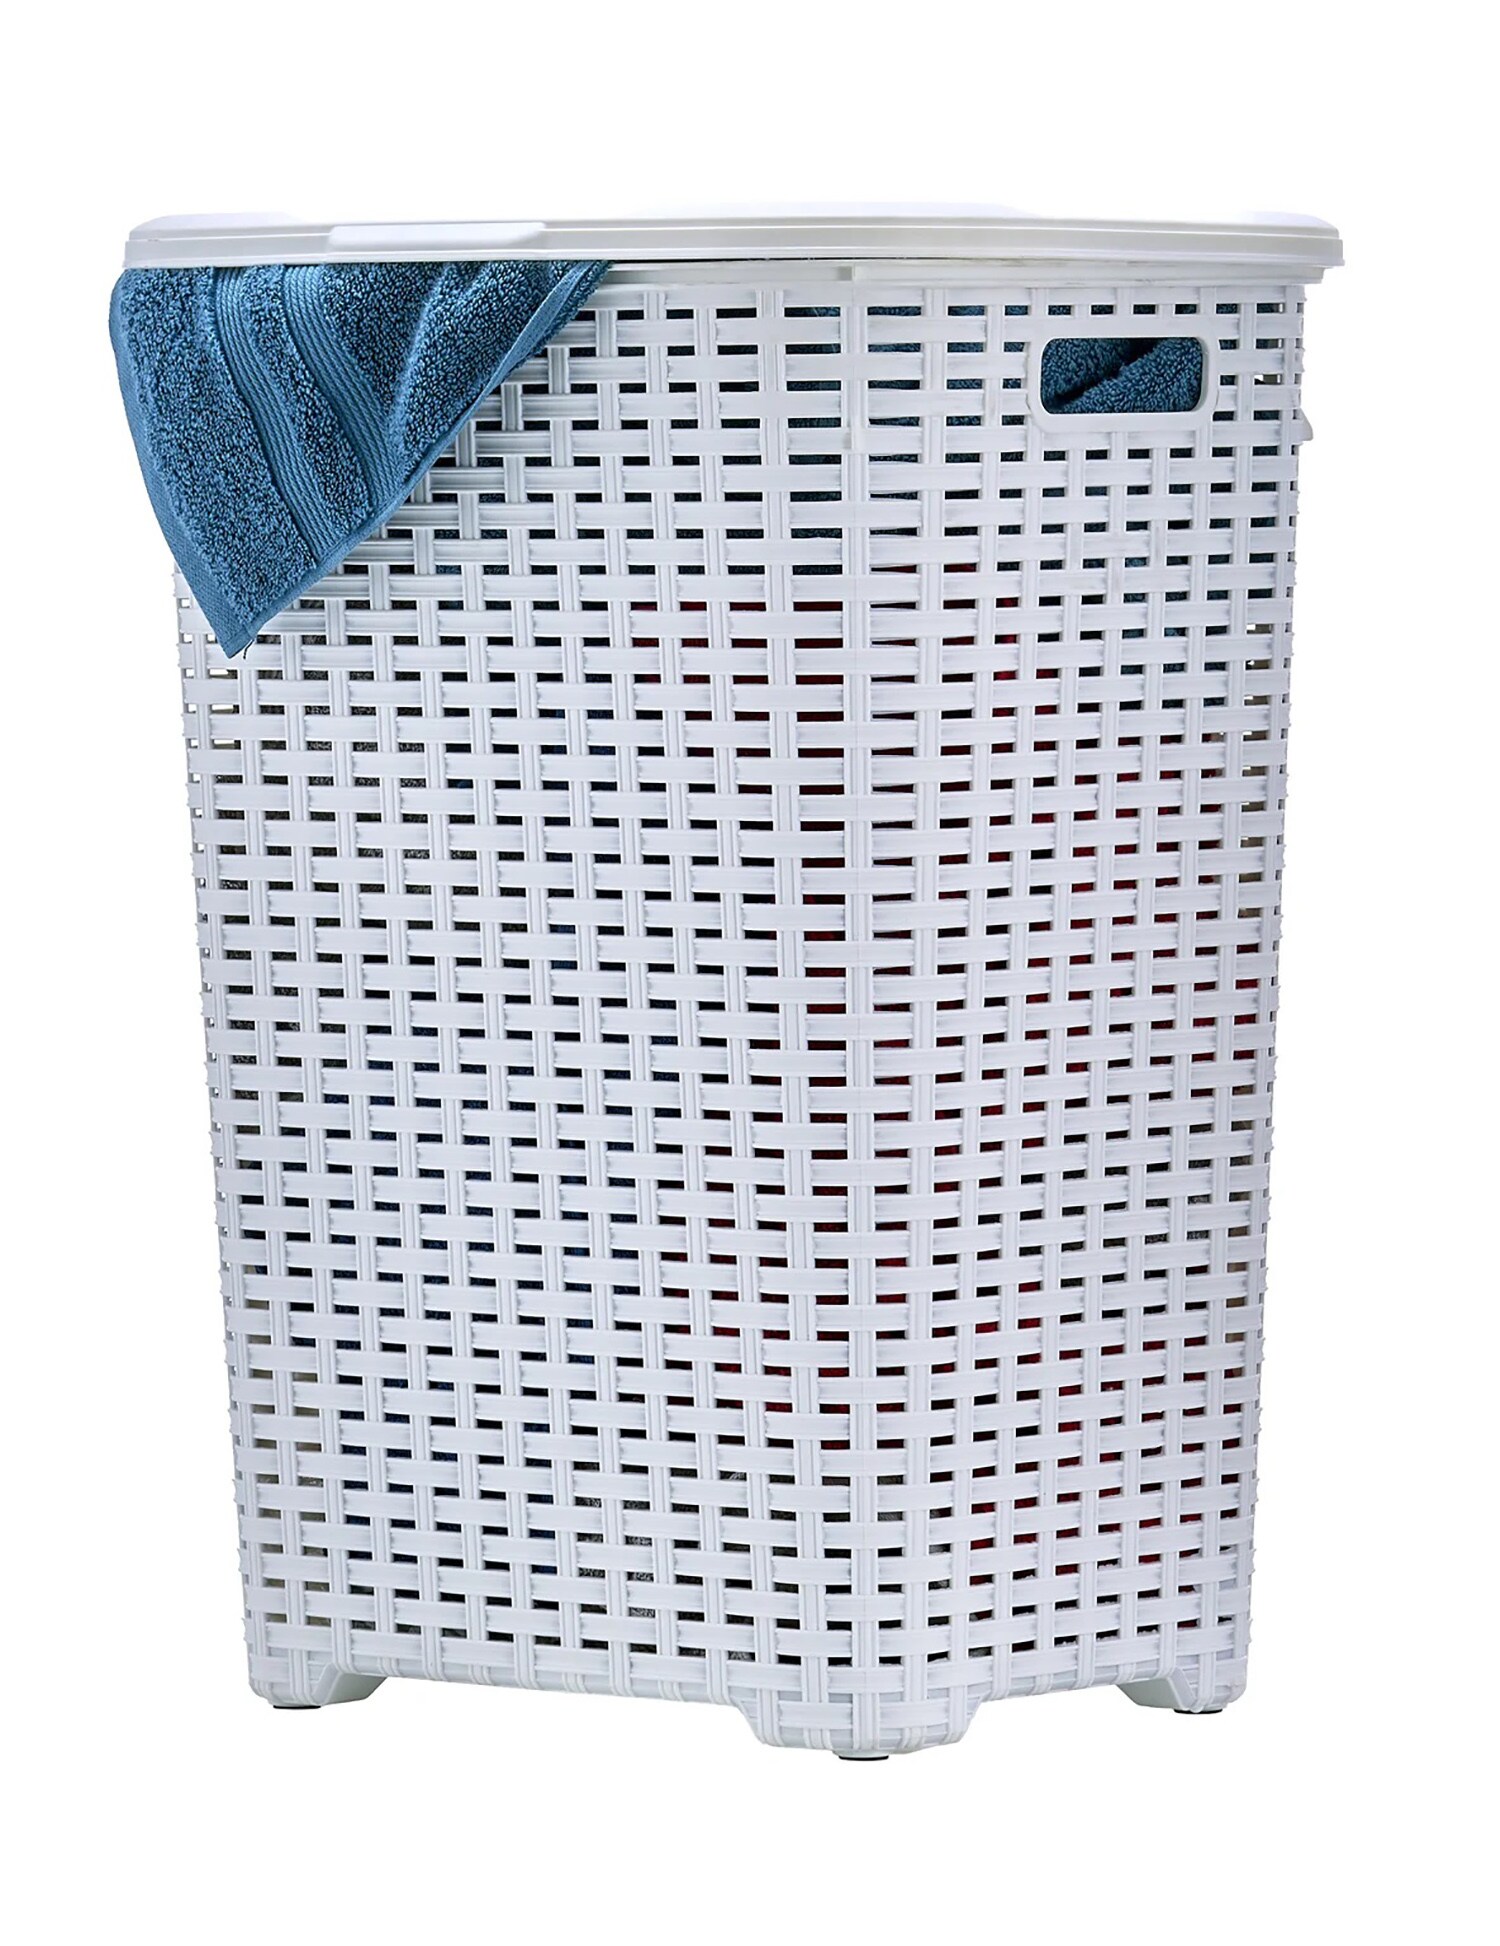 regeling zak haat Superio Brand 60-Liter Plastic Laundry Hamper at Lowes.com